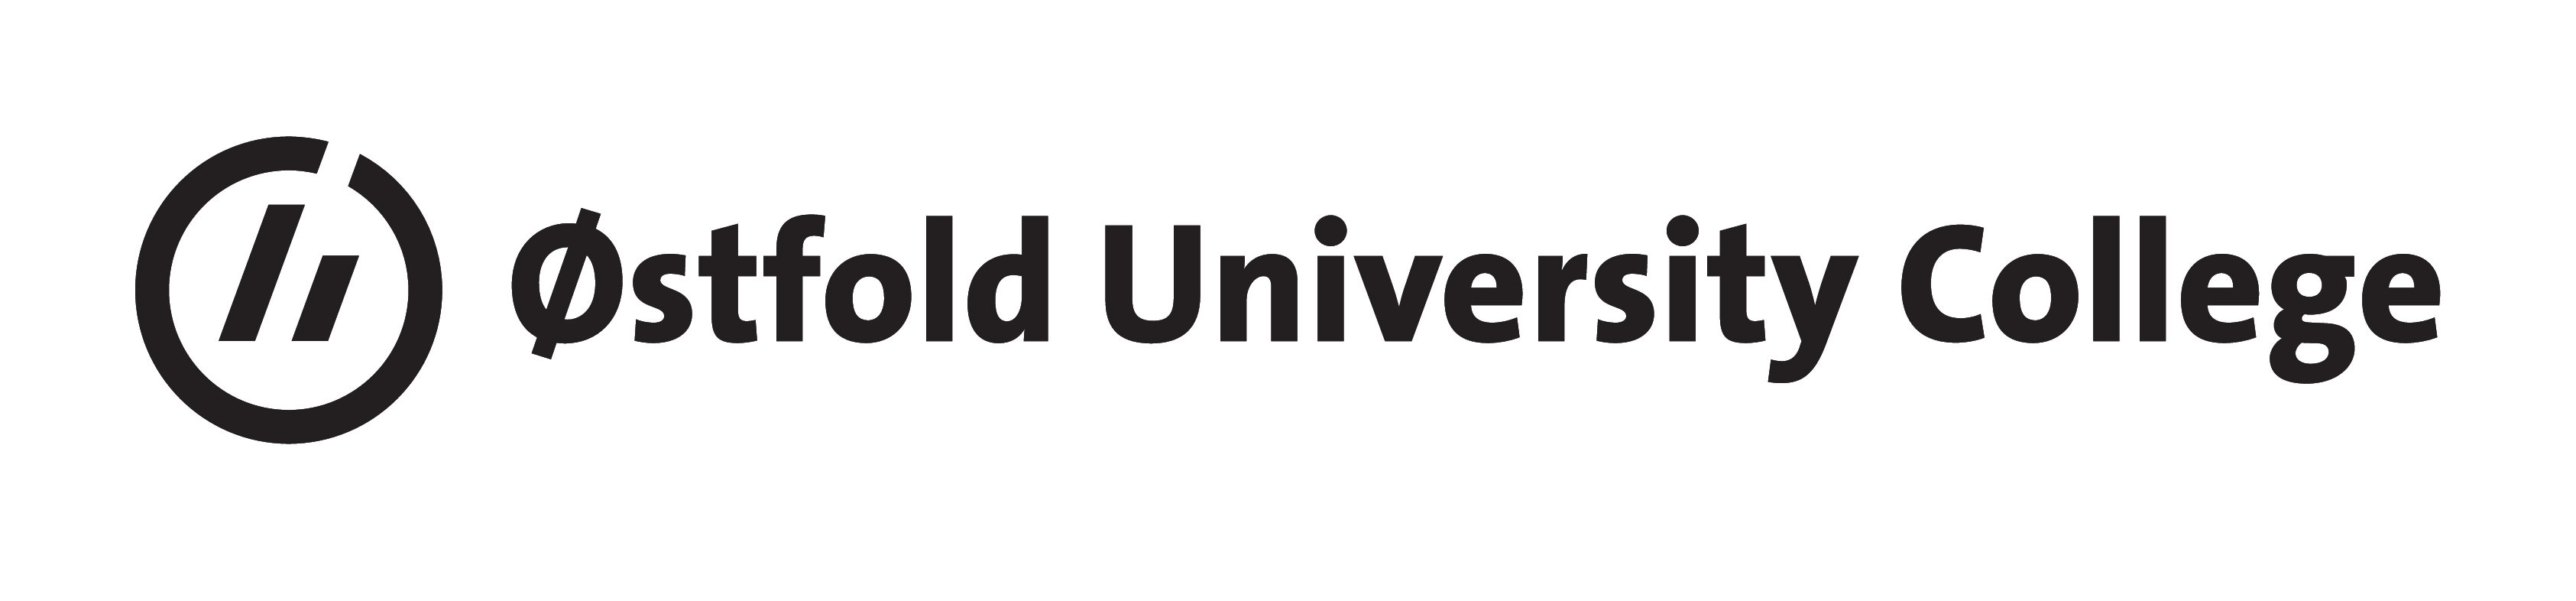 Østfold University College